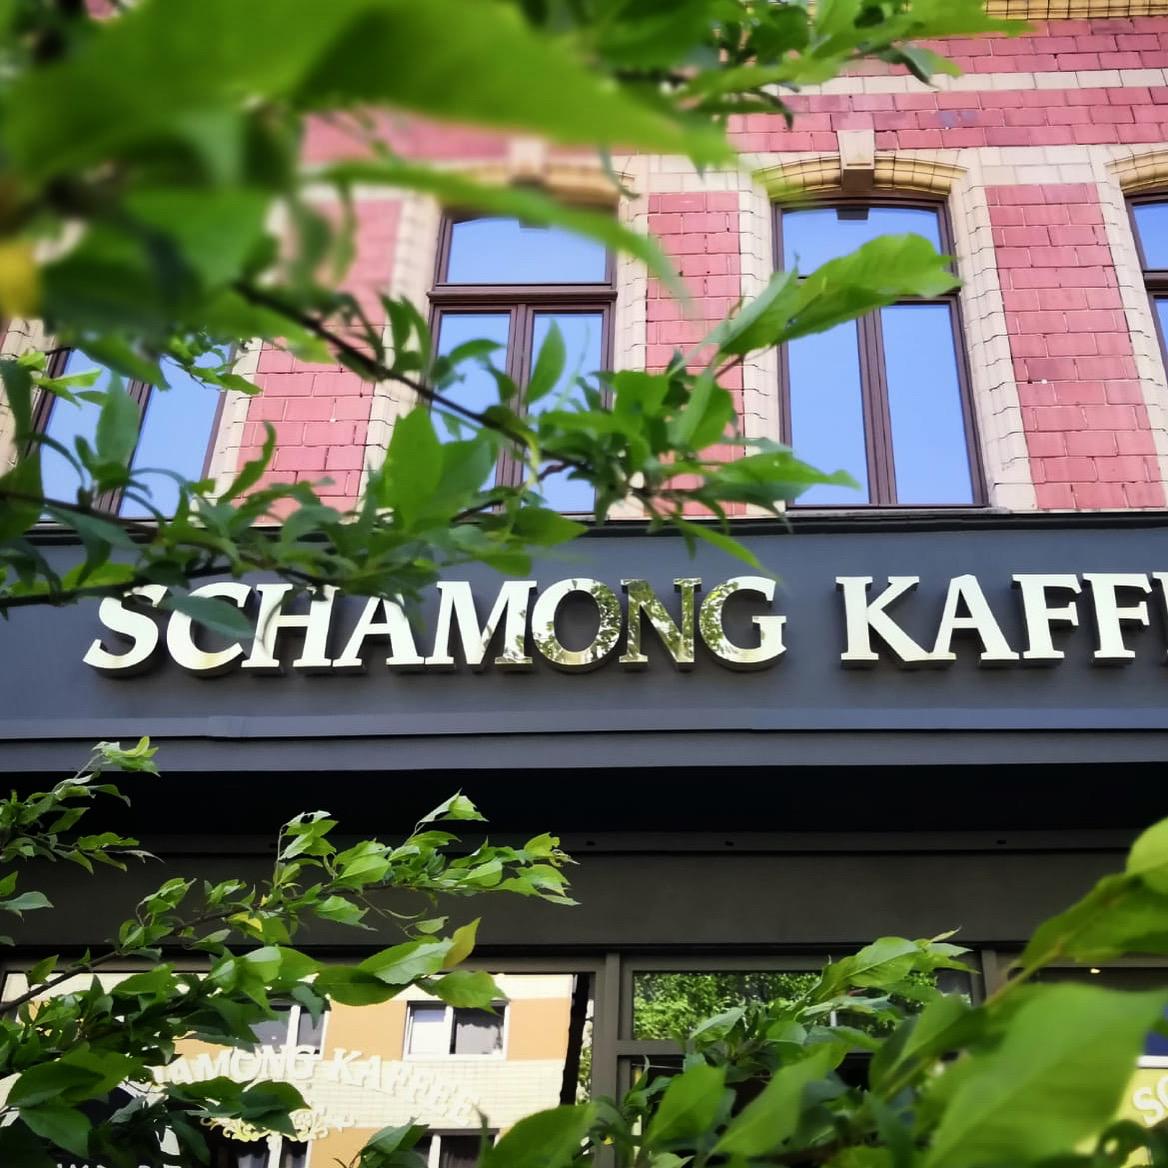 Restaurant "Schamong Kaffee" in Köln